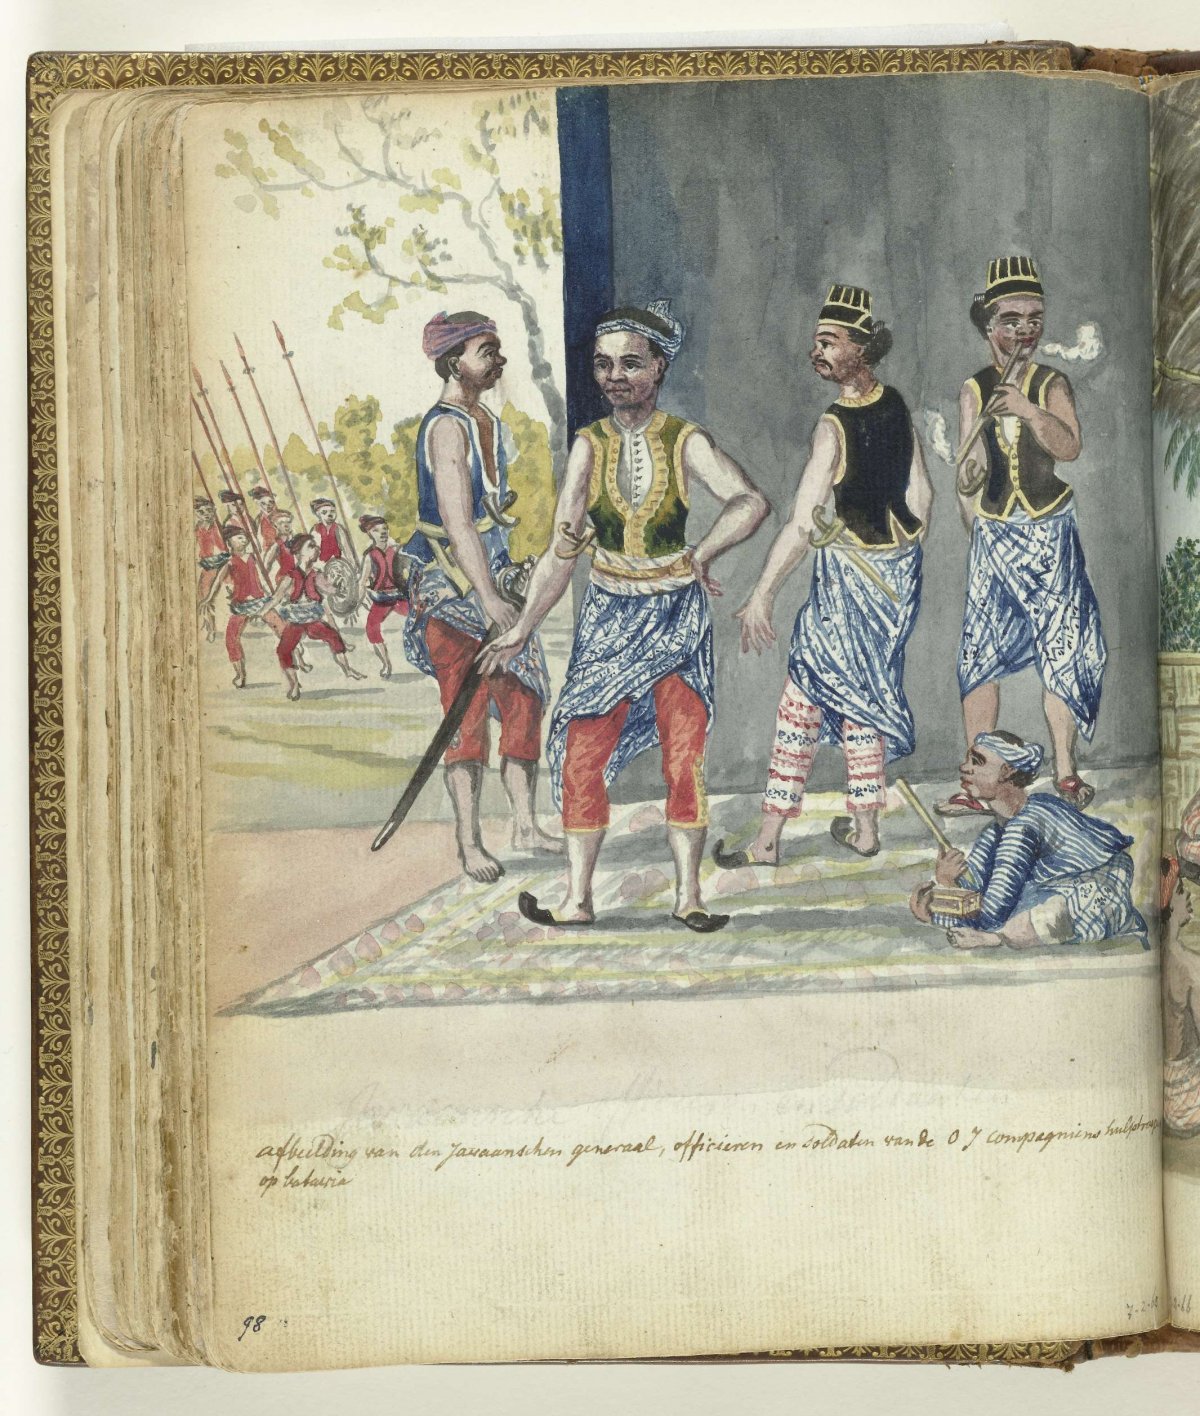 Javanese auxiliaries of the Company, Jan Brandes, 1779 - 1785